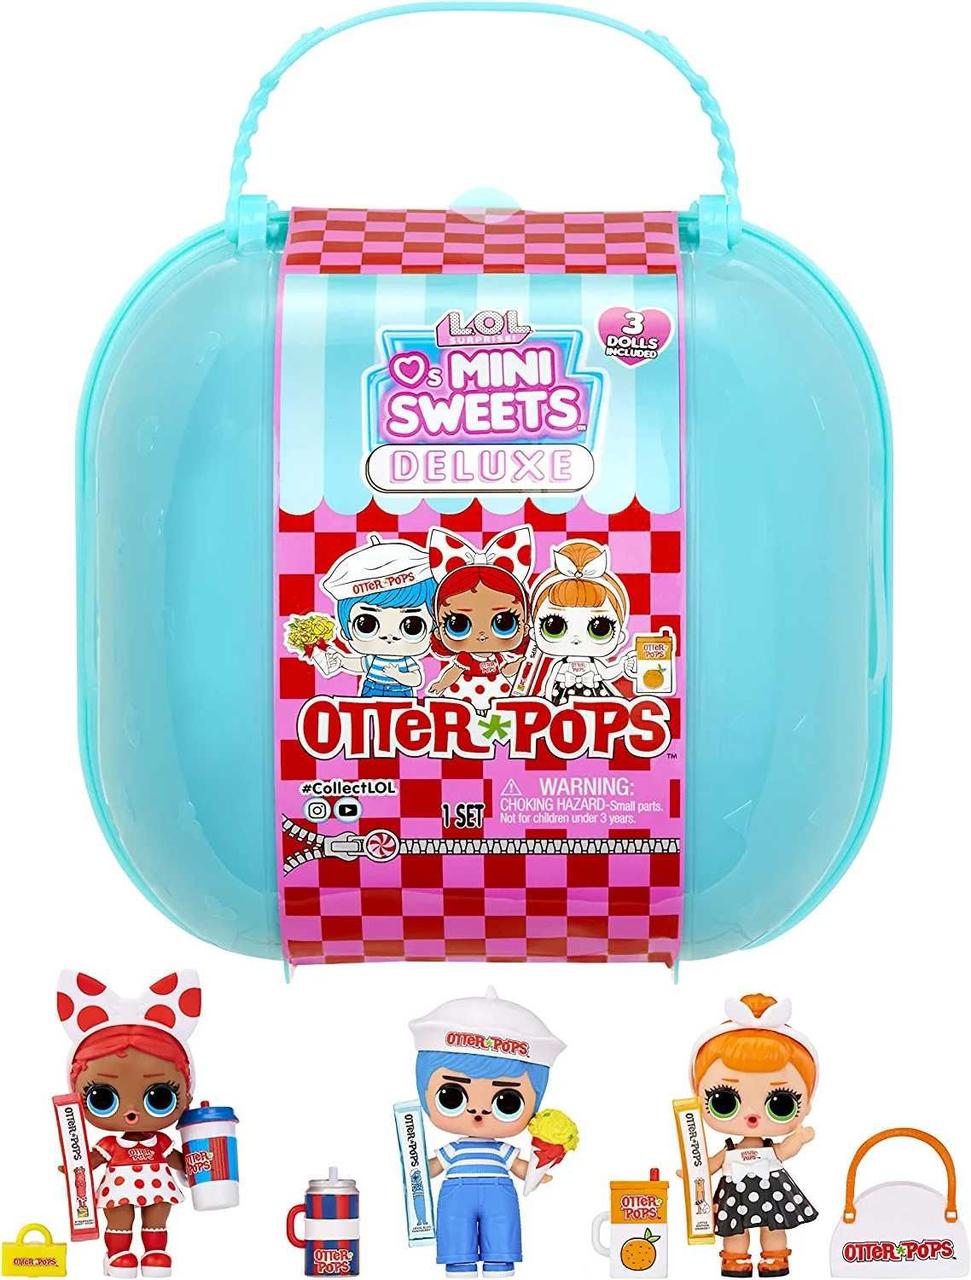 LОЛ Делюкс 3 ляльки Міні світс LOL Loves Mini Sweets Otter Pops Deluxe